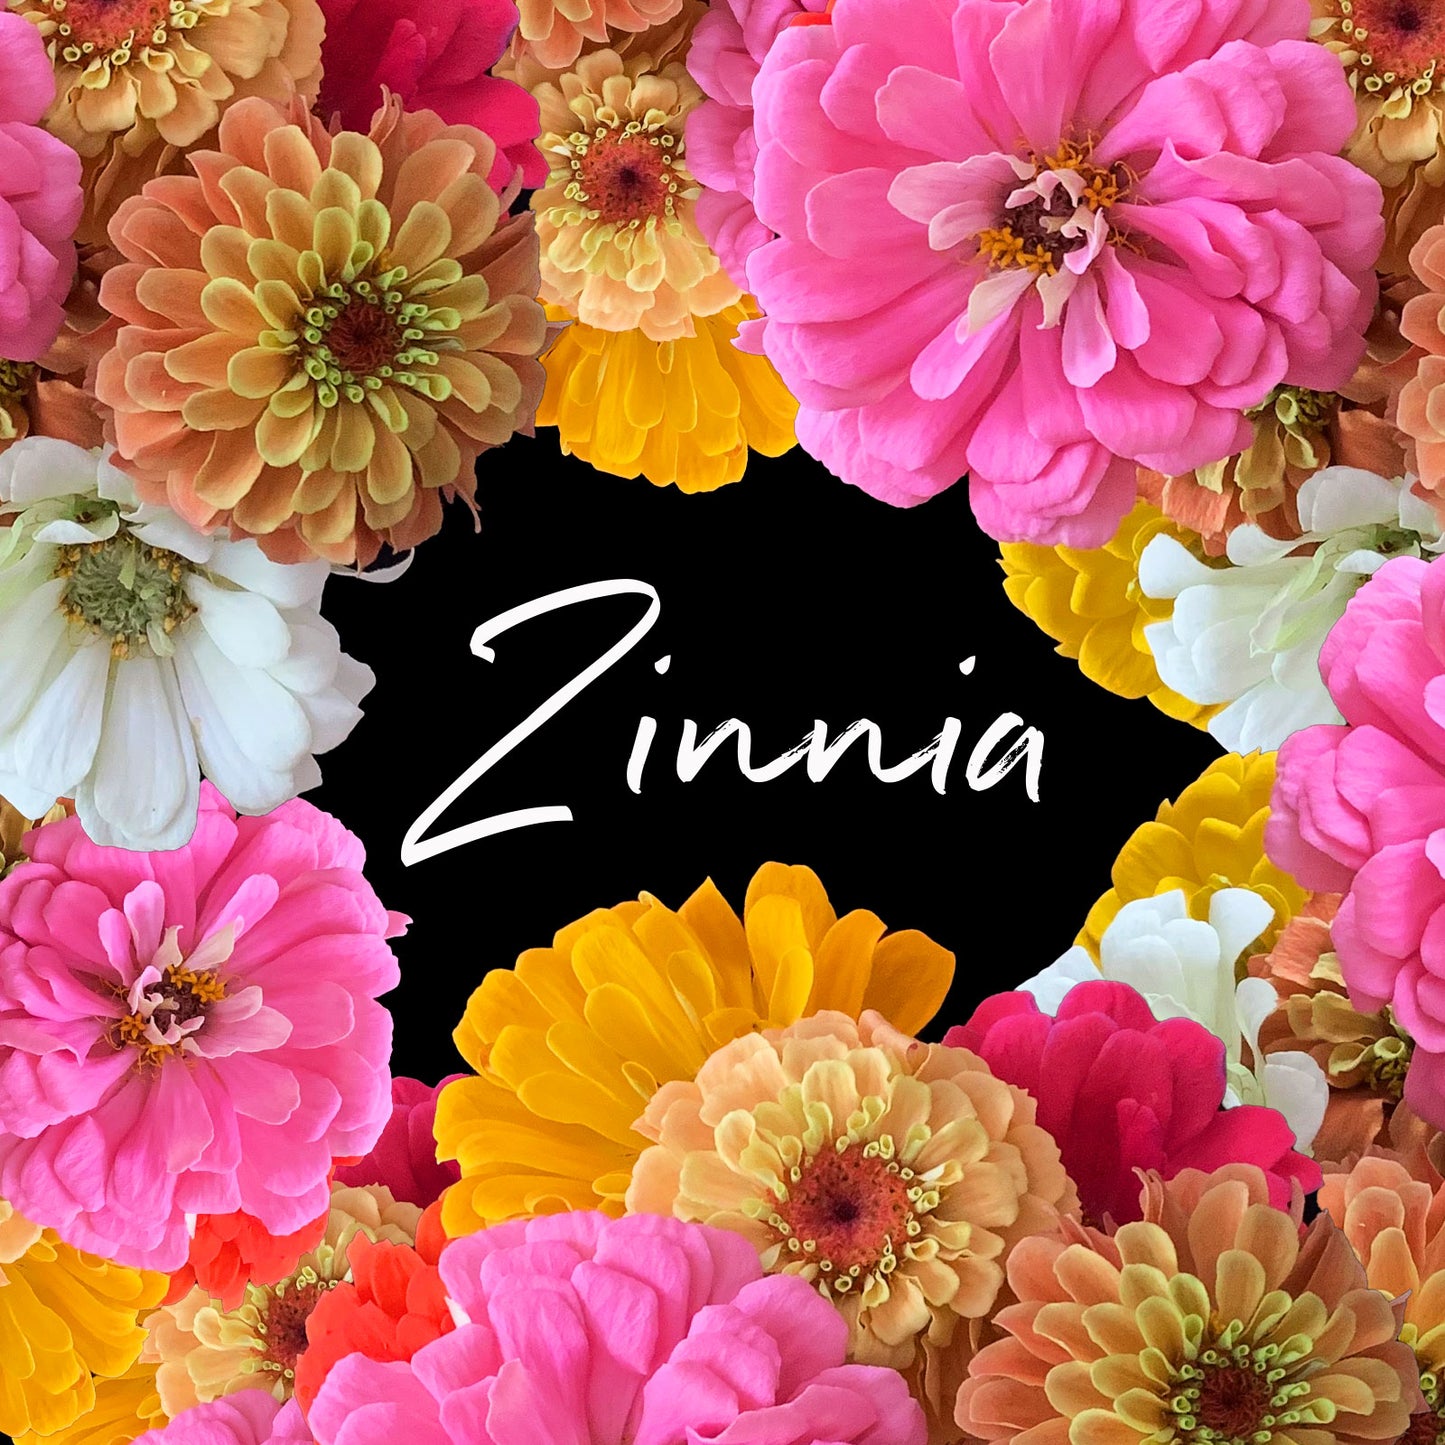 Behind the Bloom: Zinnia